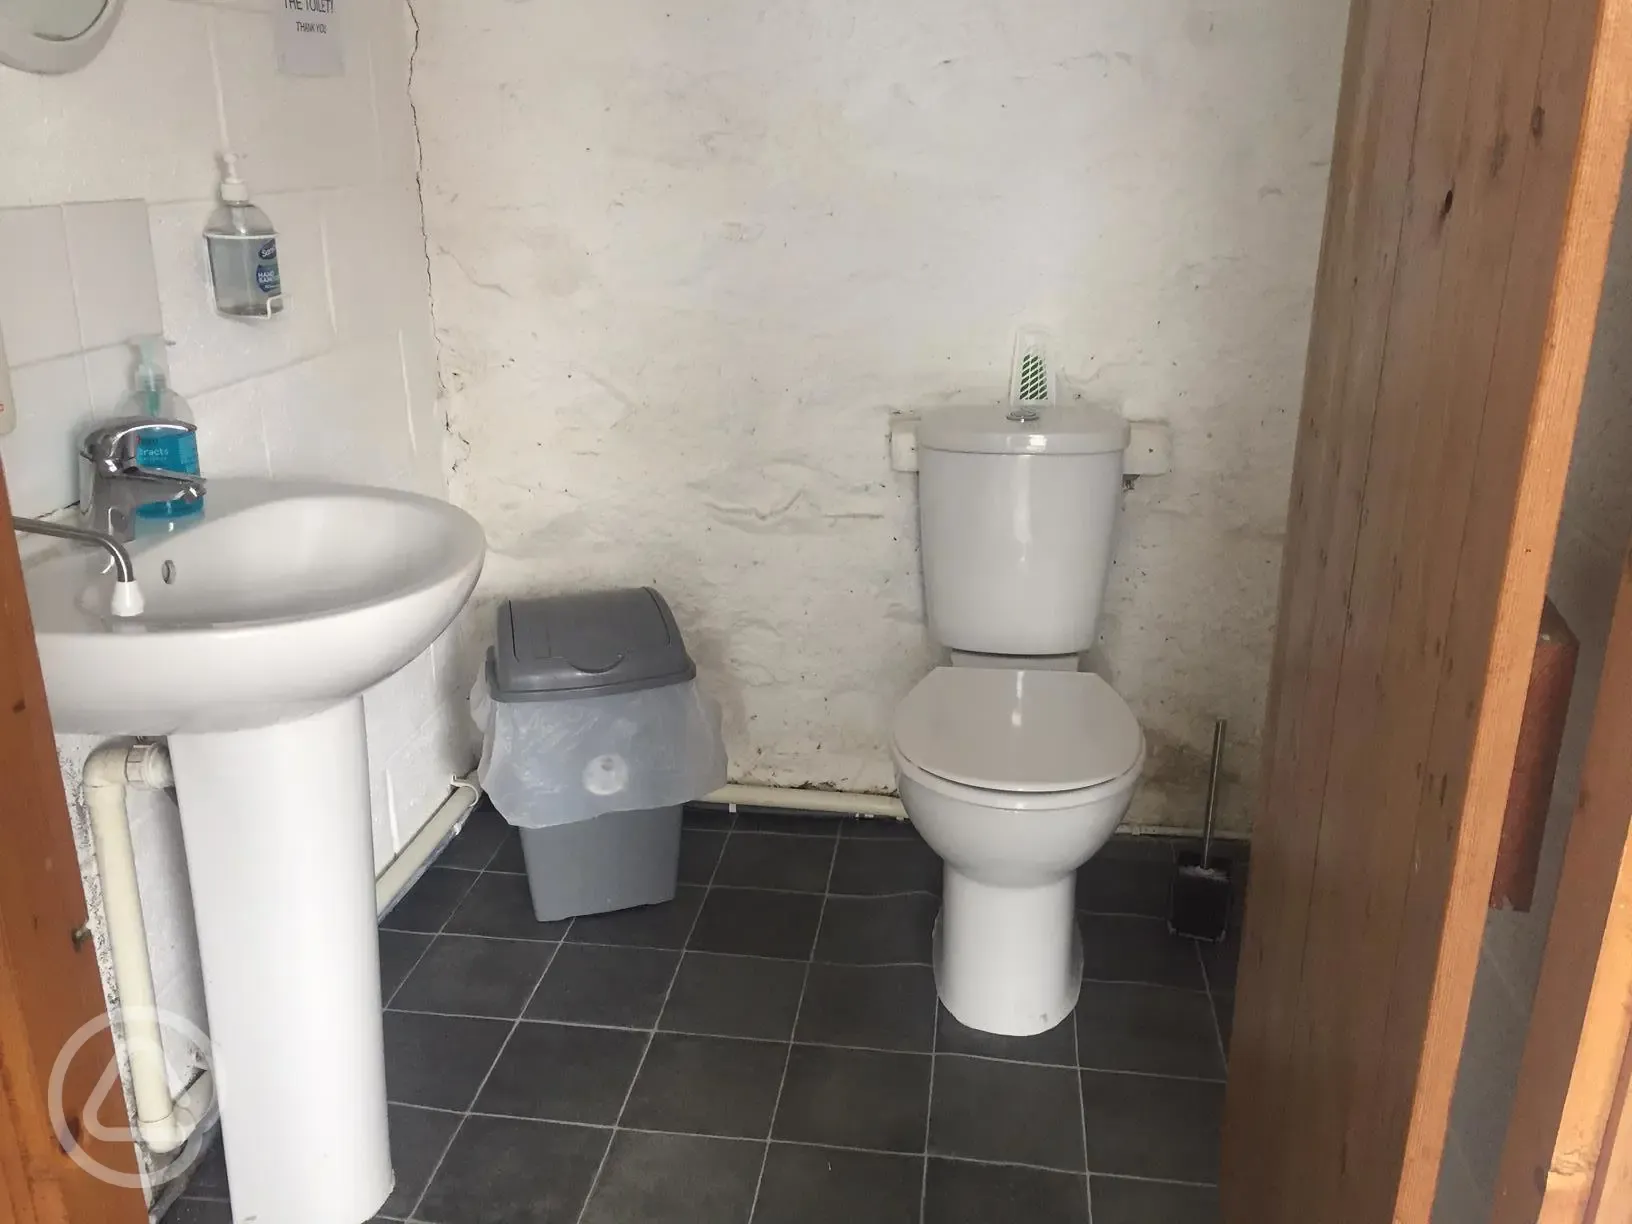 Facilities - toilet and washbasin